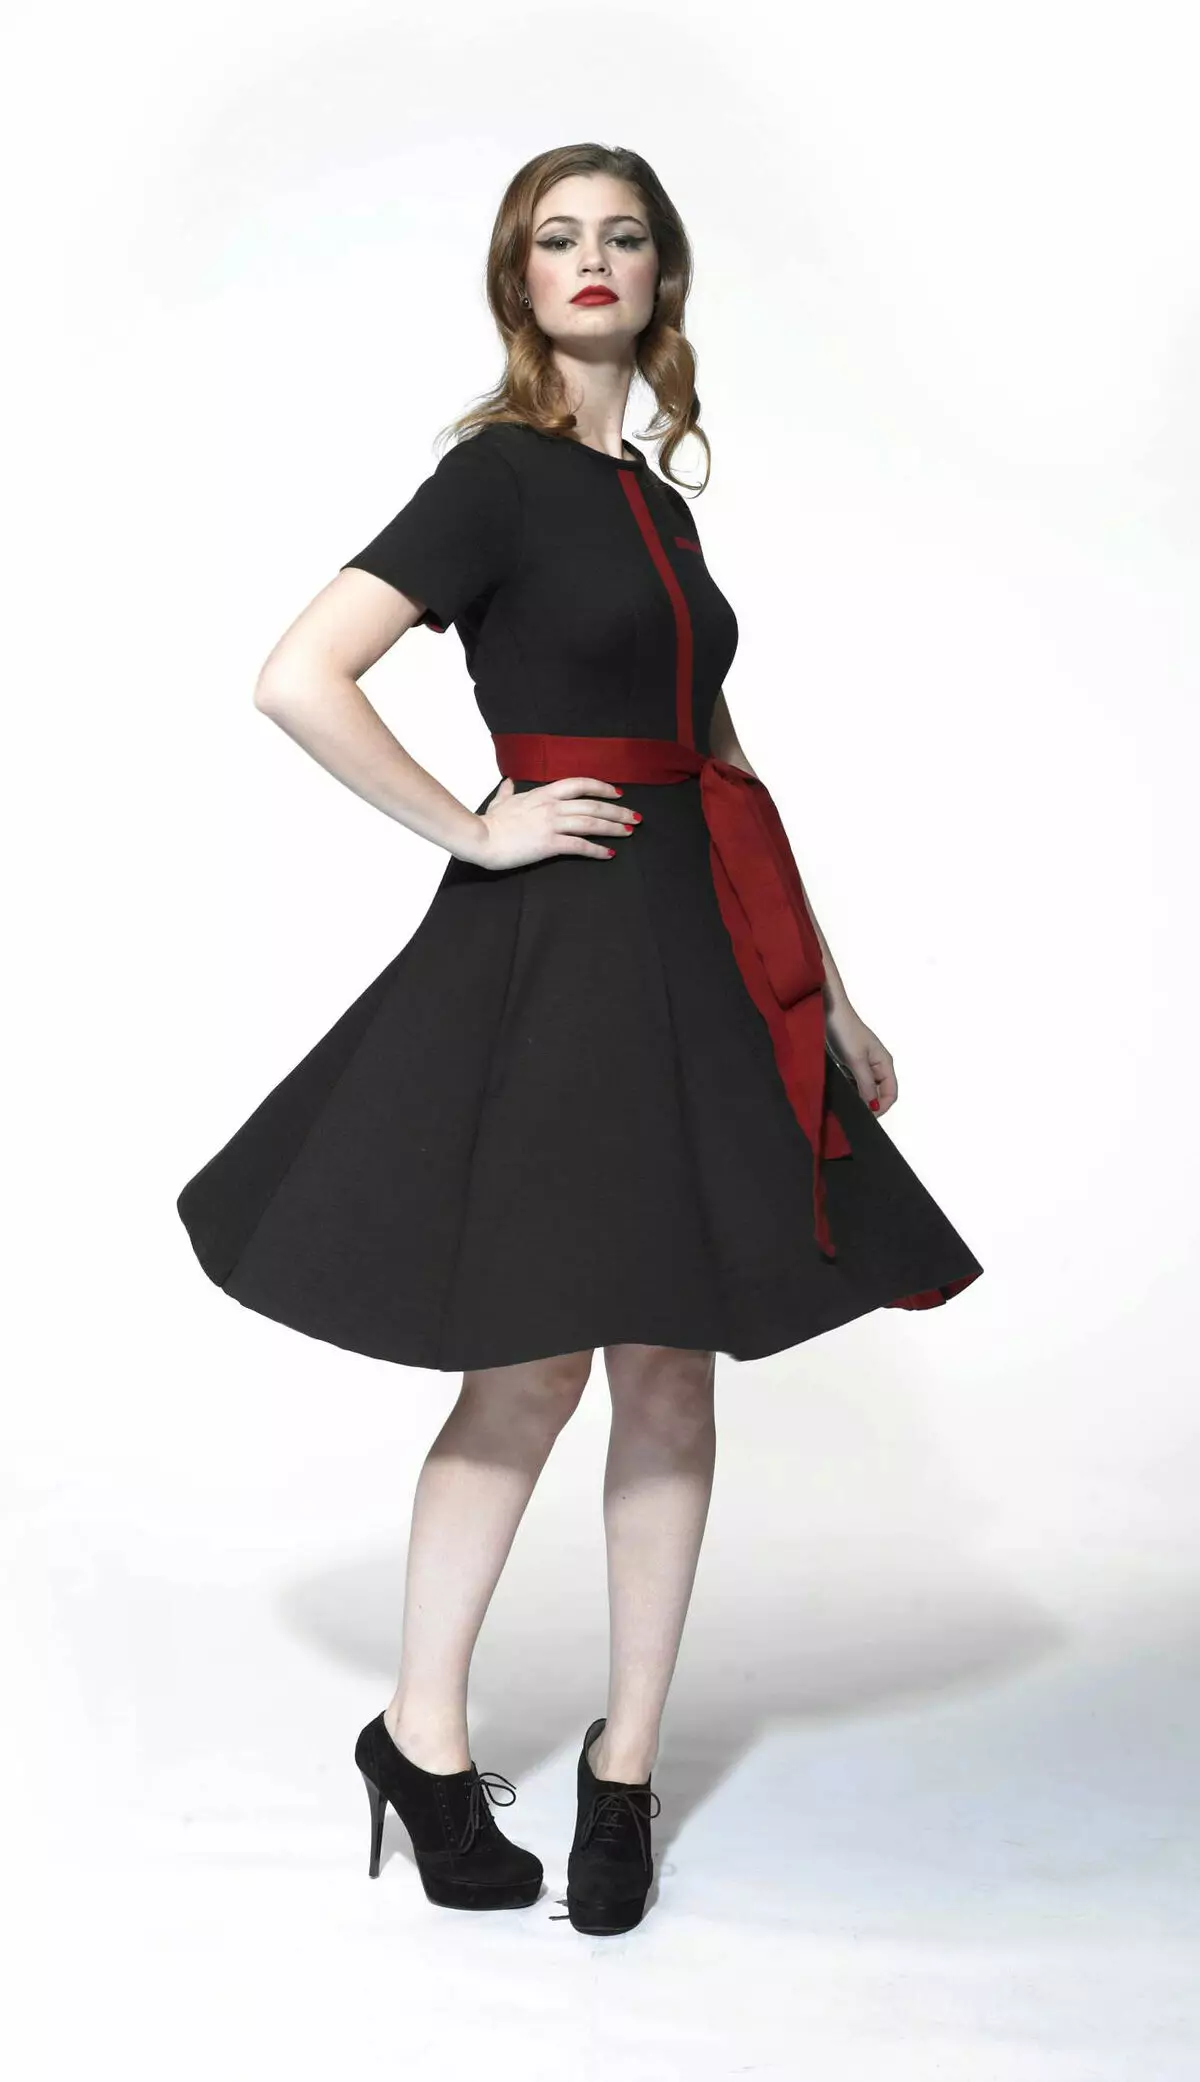 Čierne údené šaty s červeným pásom